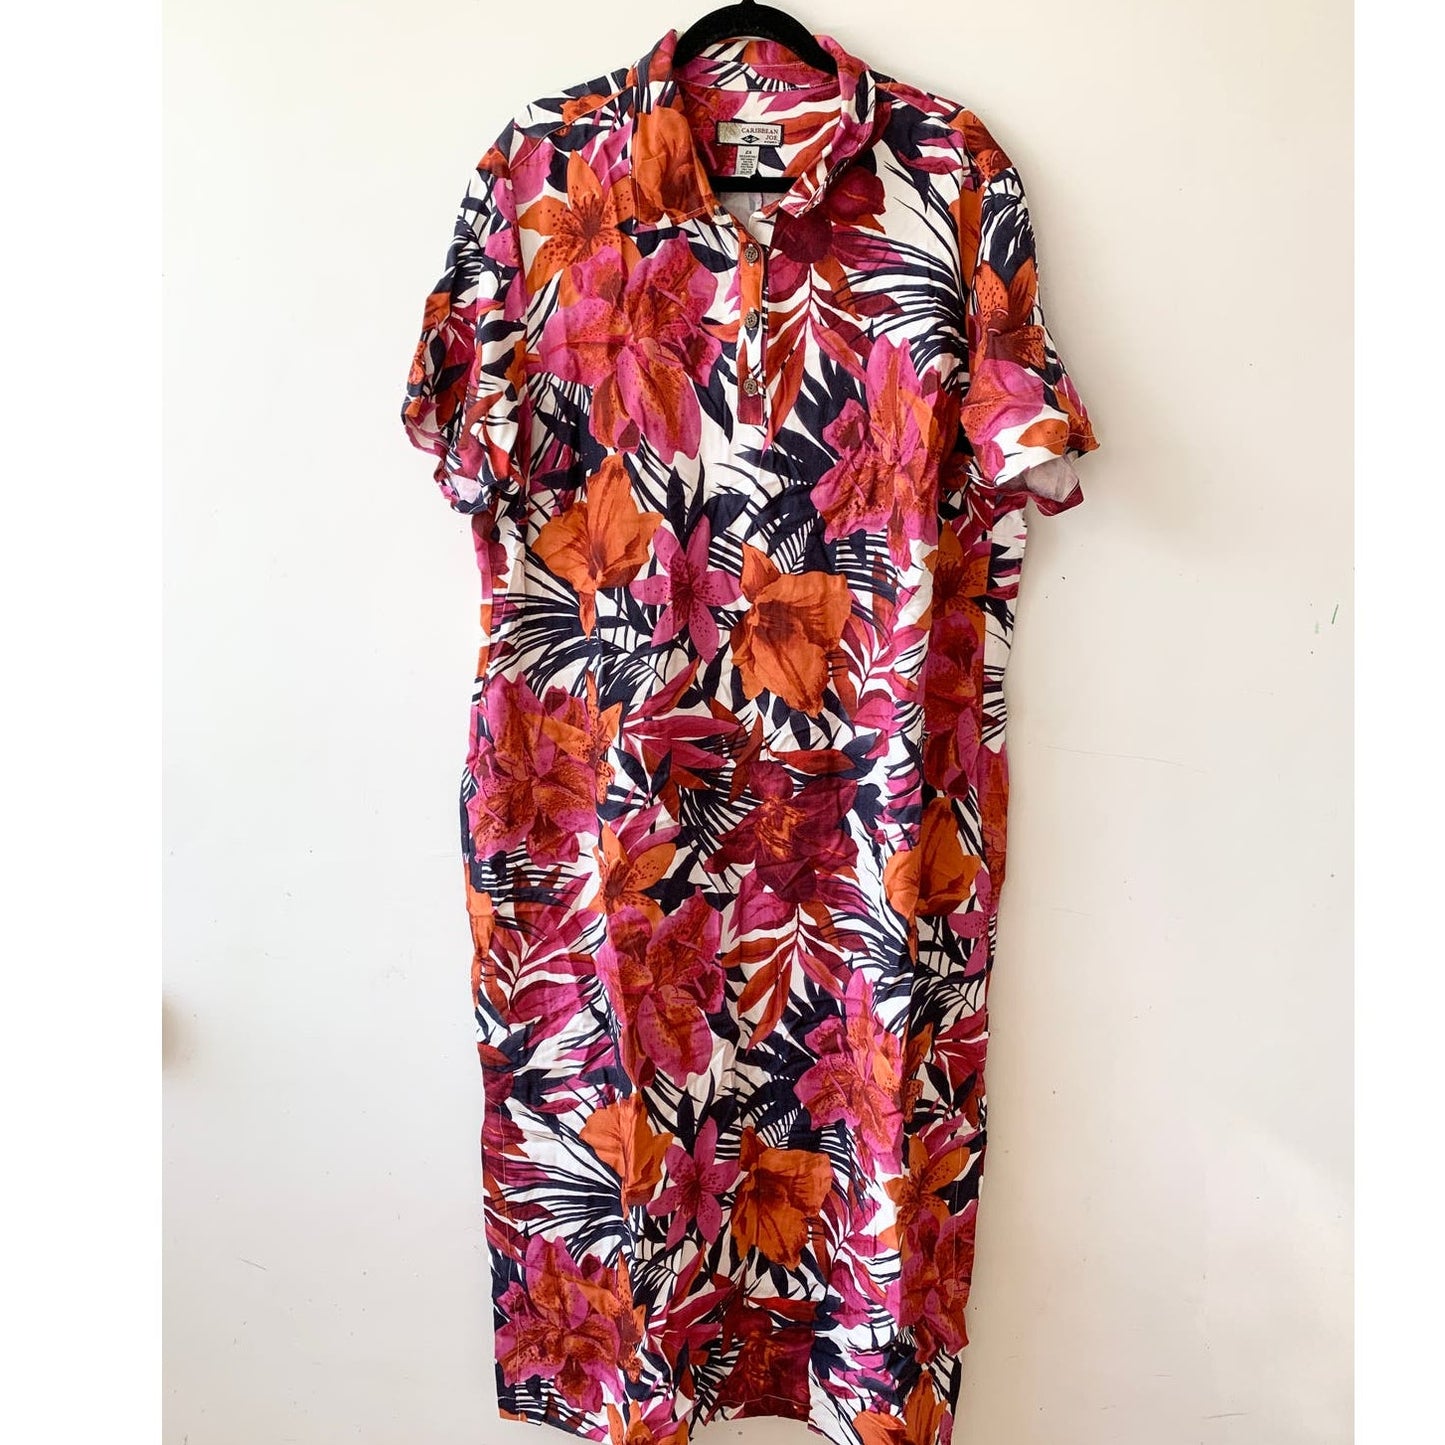 CARIBBEAN JOE Tropical Floral Pink Maxi Dress 2X